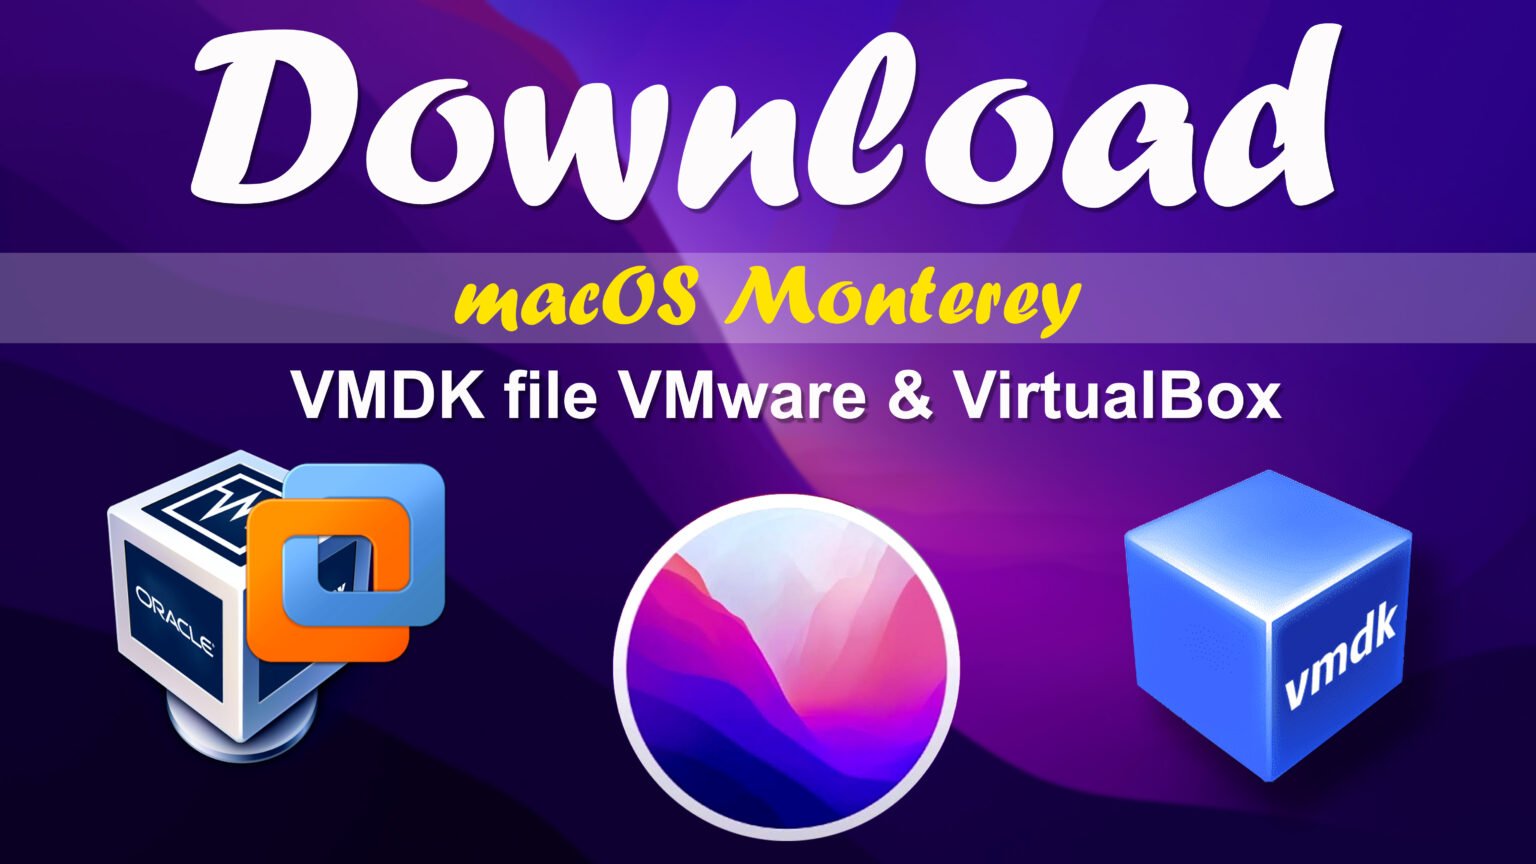 download virtualbox 4.3.10